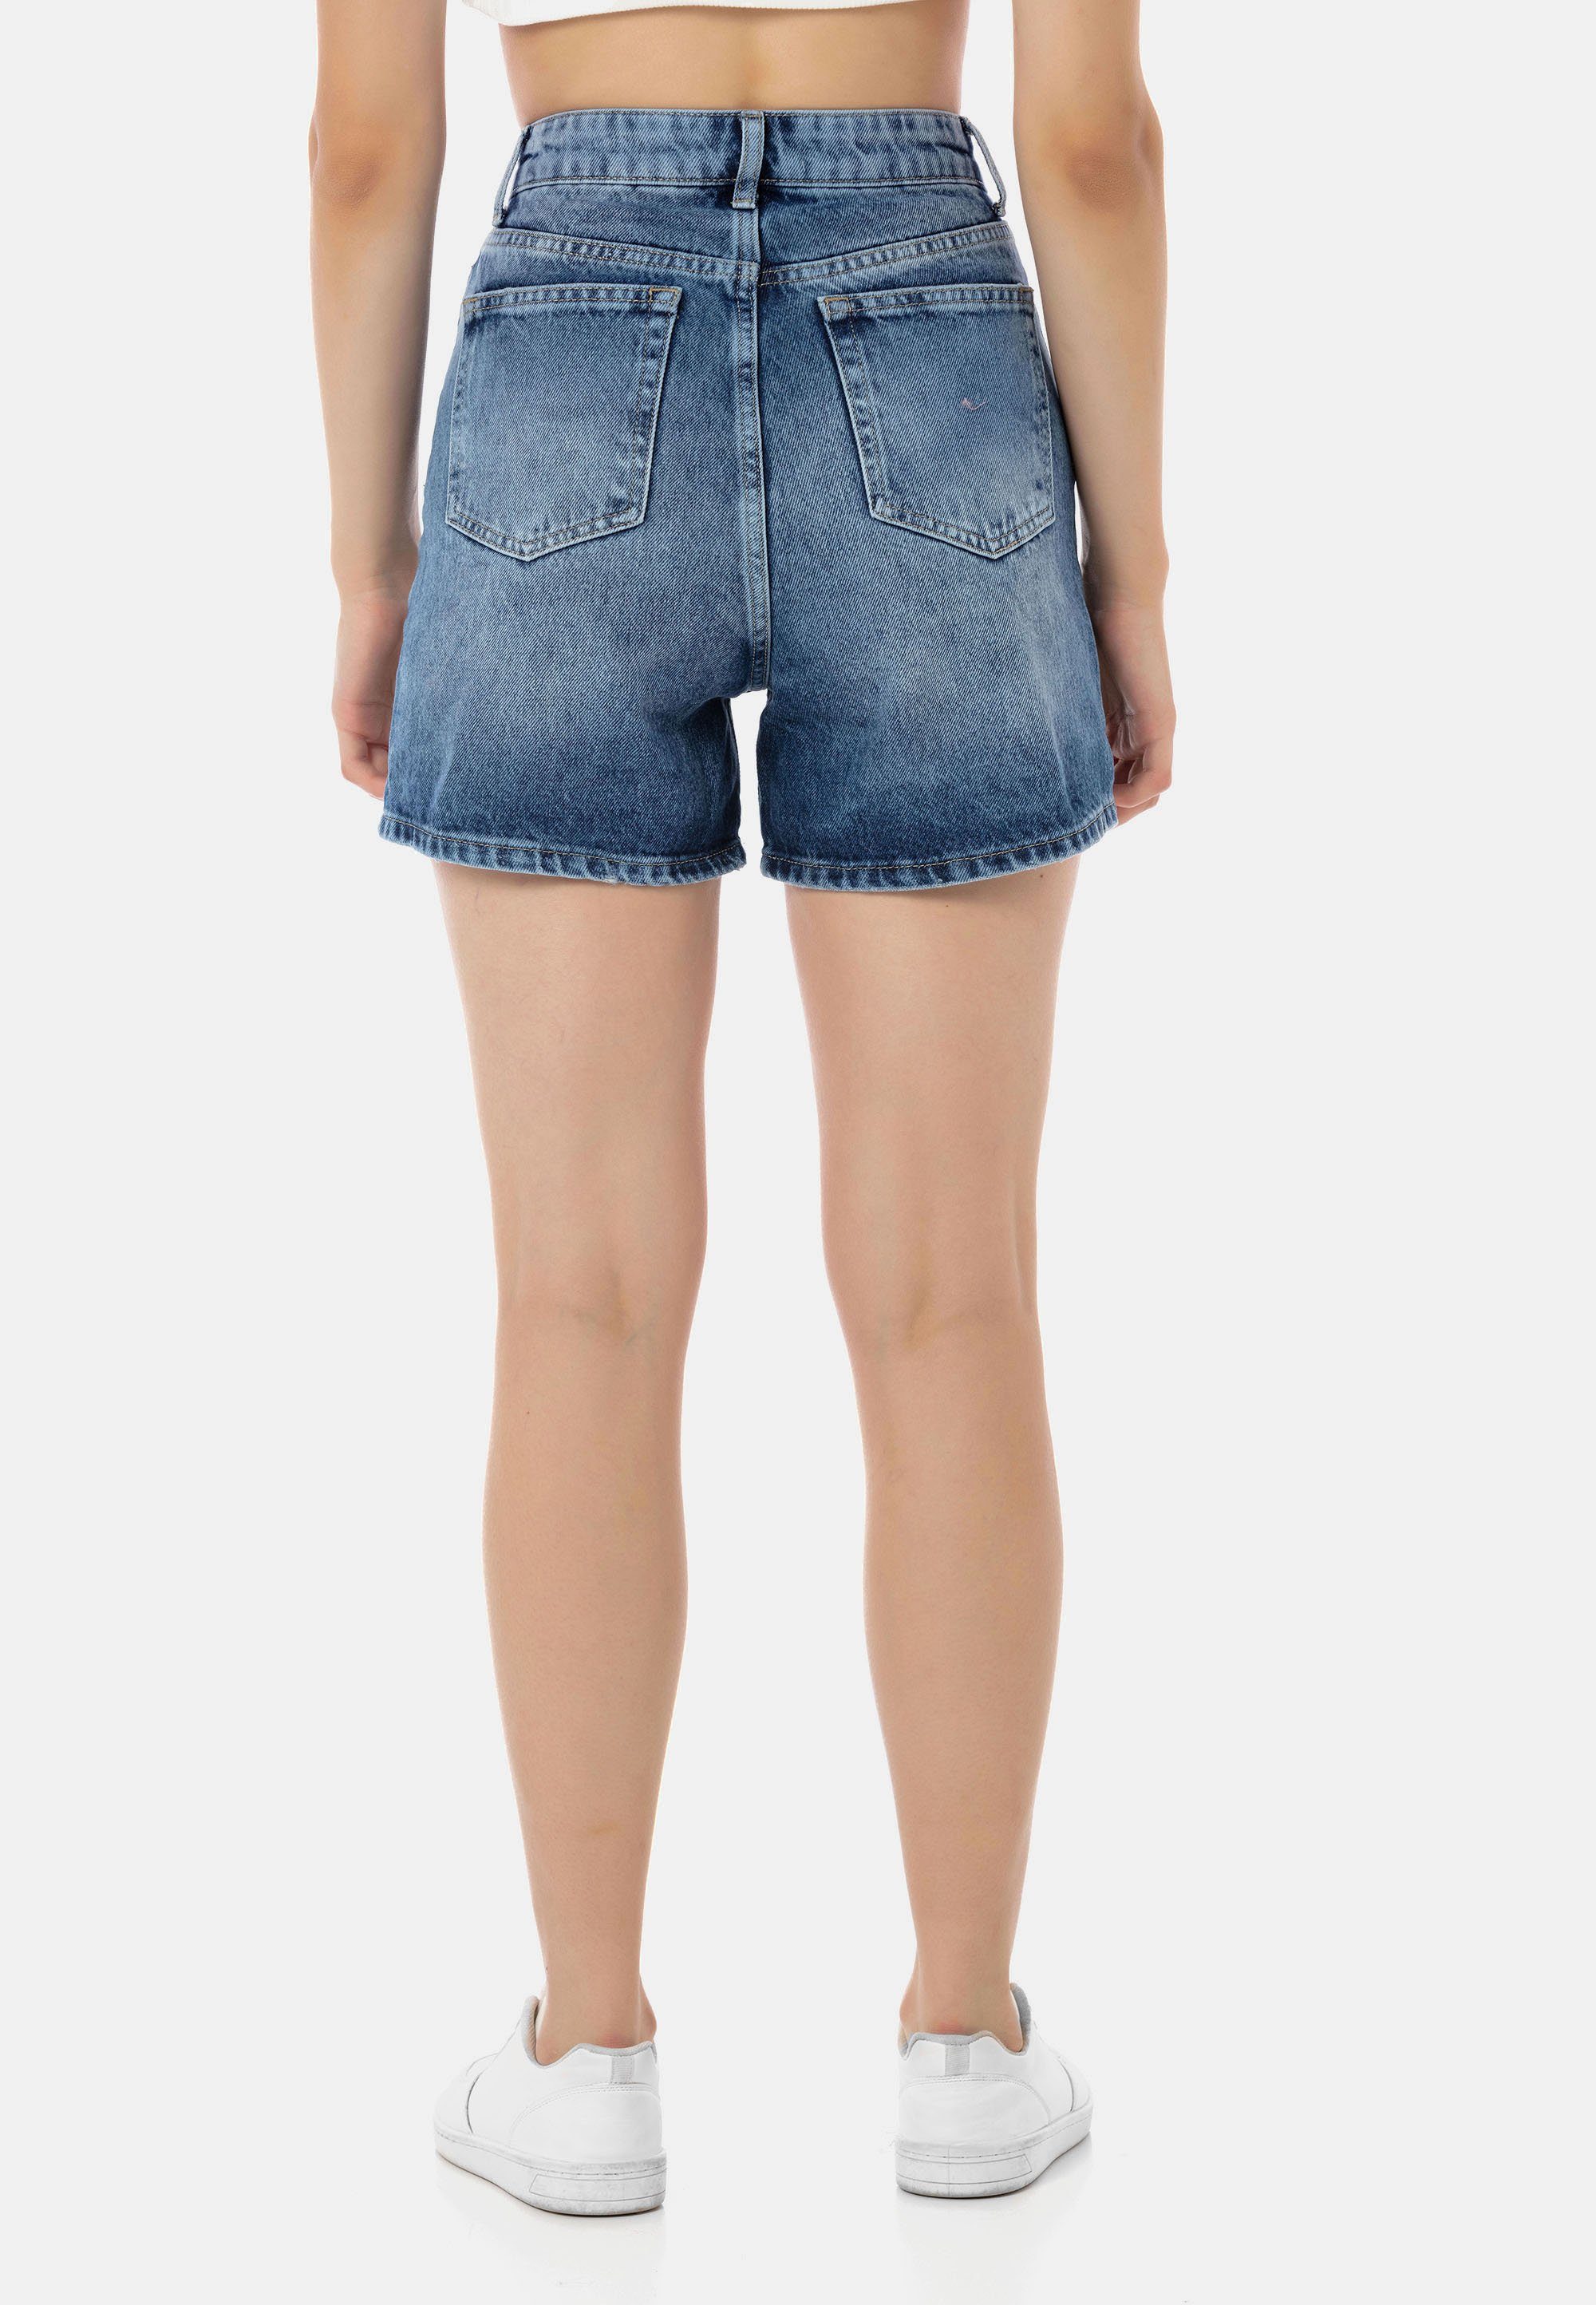 RedBridge blau Willenhall 5-Pocket-Style Shorts mit klassischem